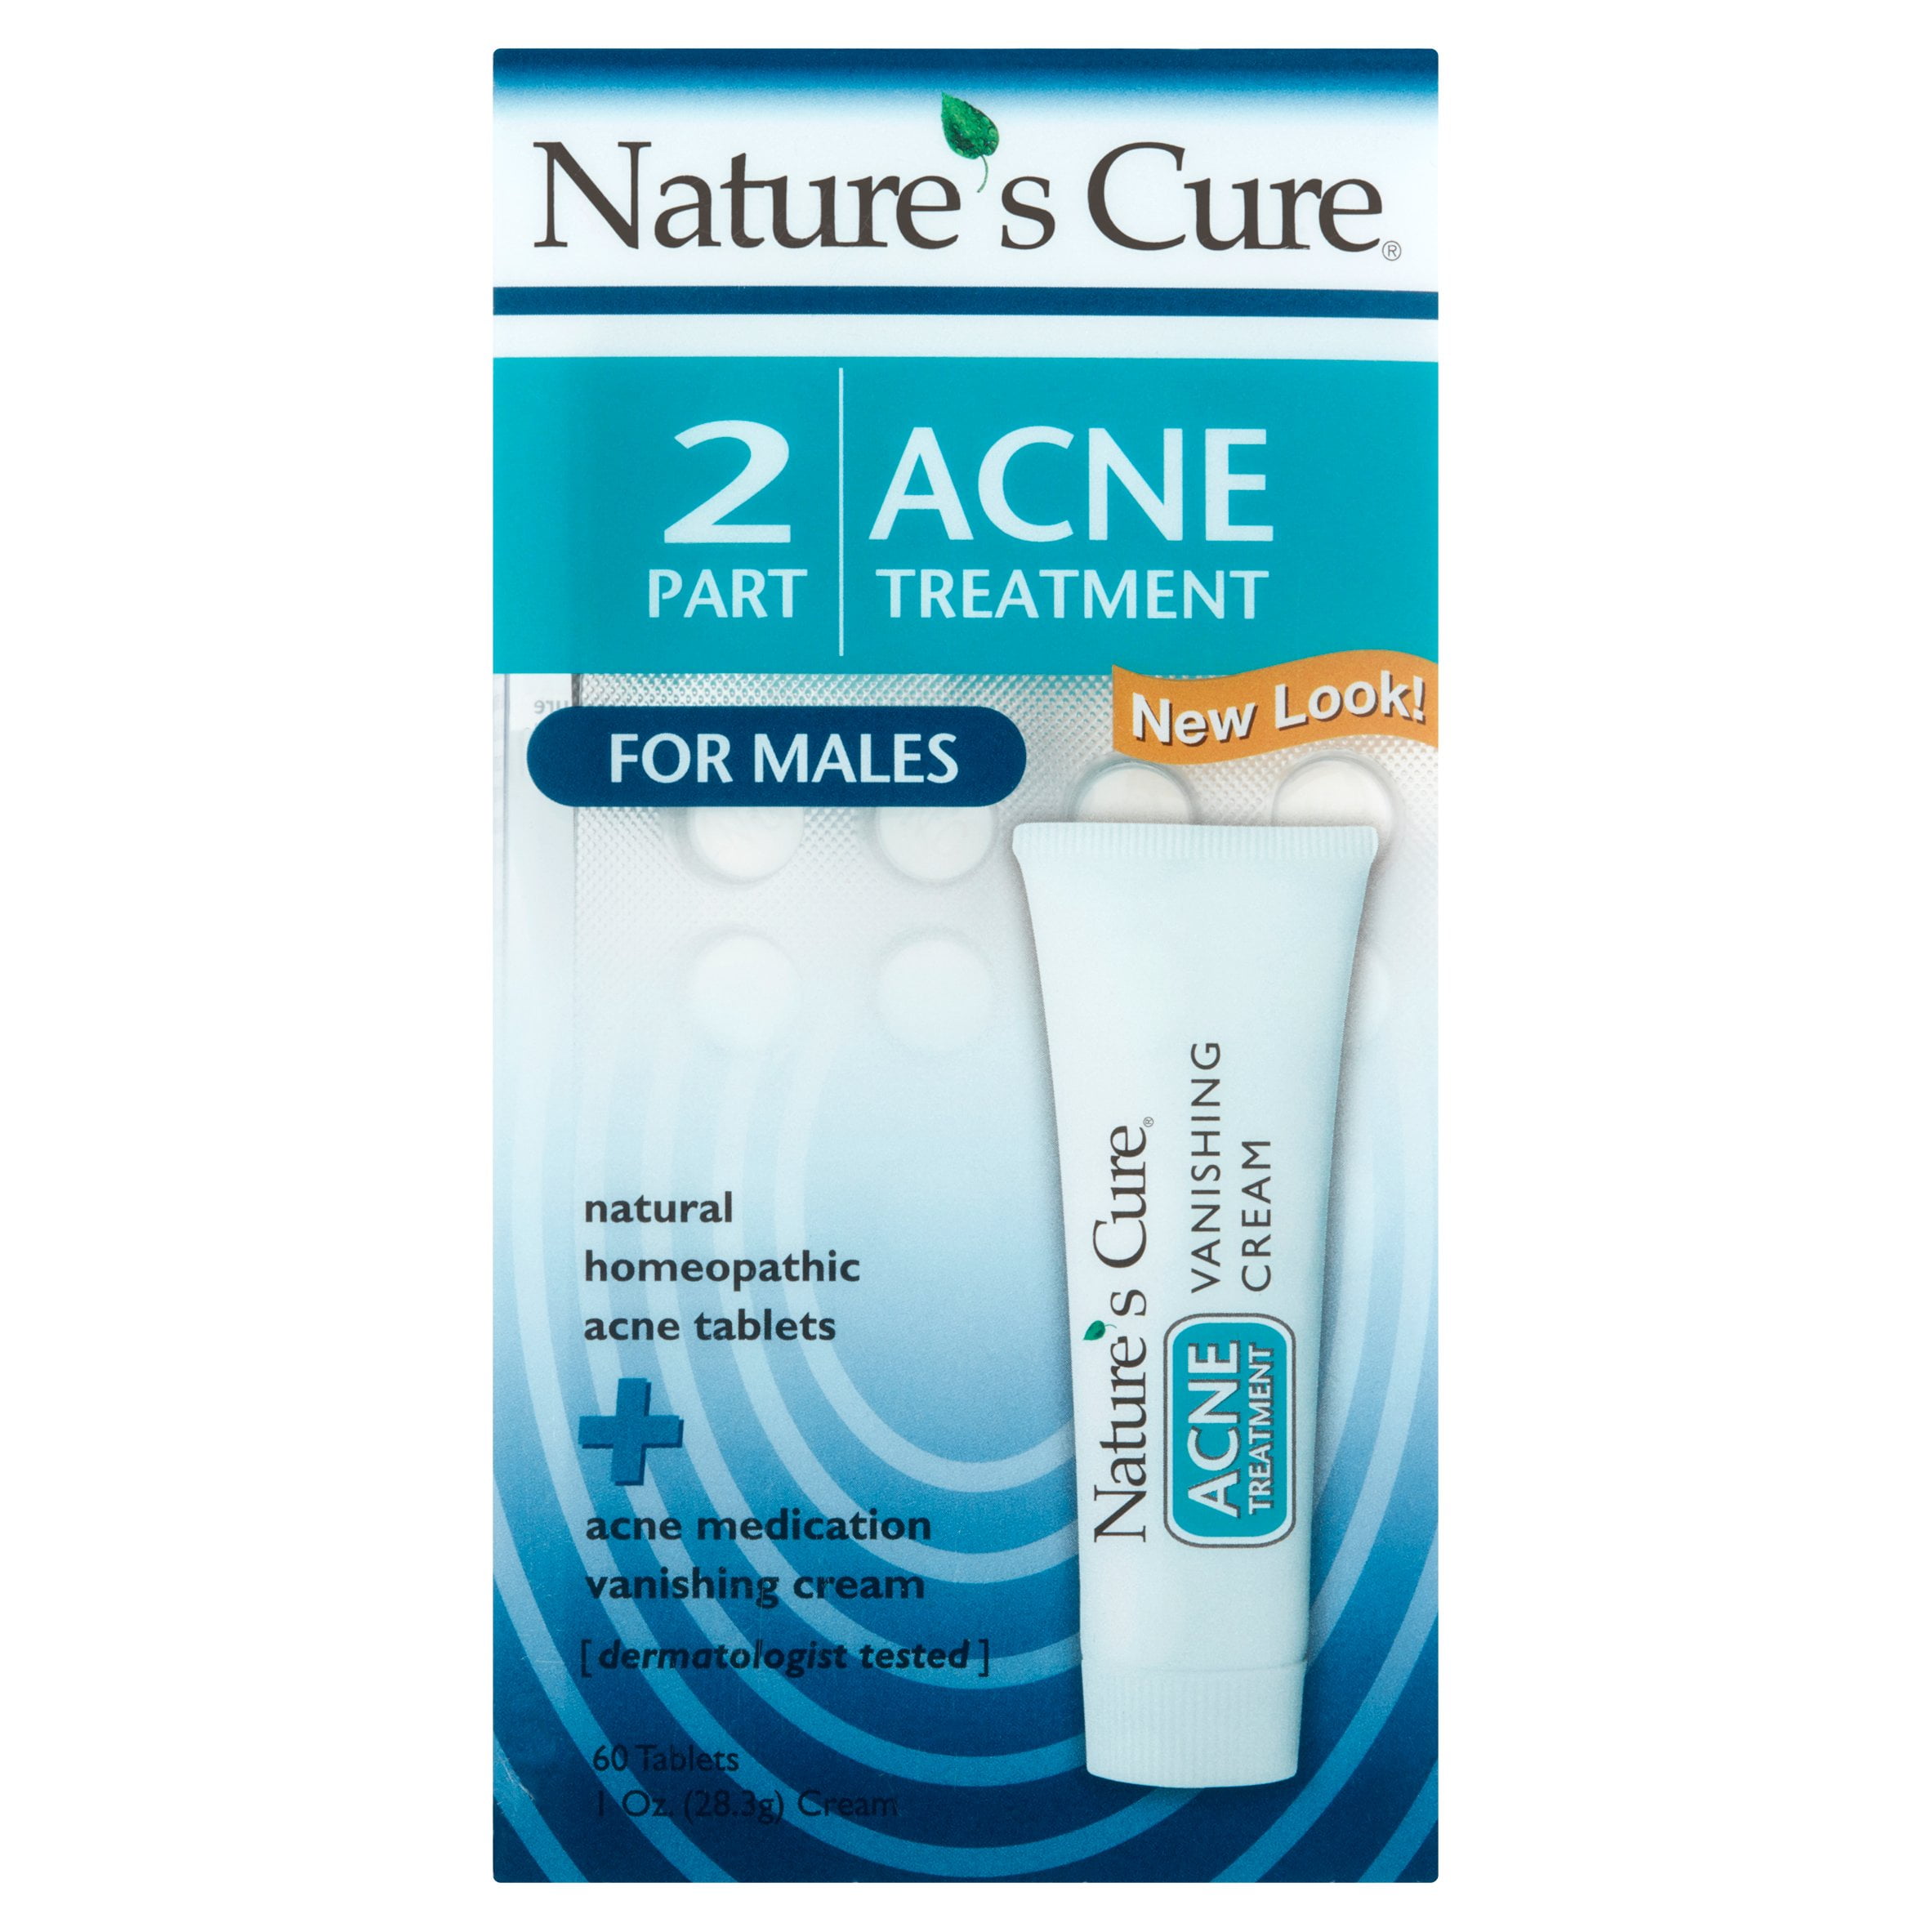 Nature's Cure 2 Part Acne Treatment for Males - Walmart.com - Walmart.com